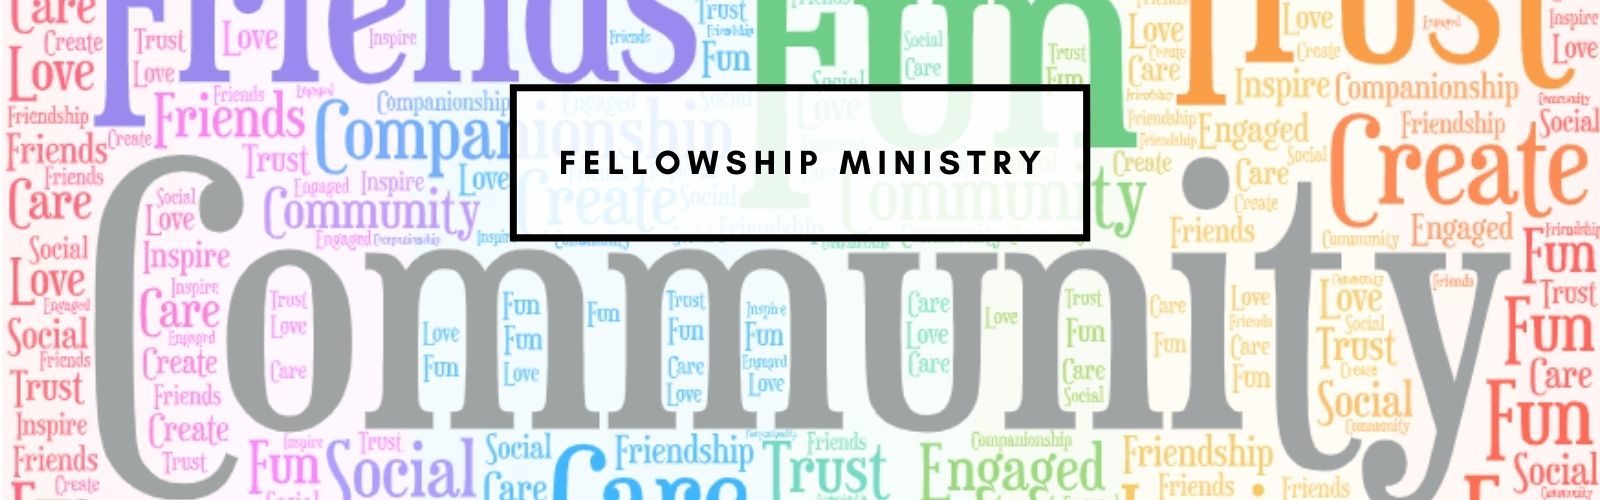 fellowship ministry